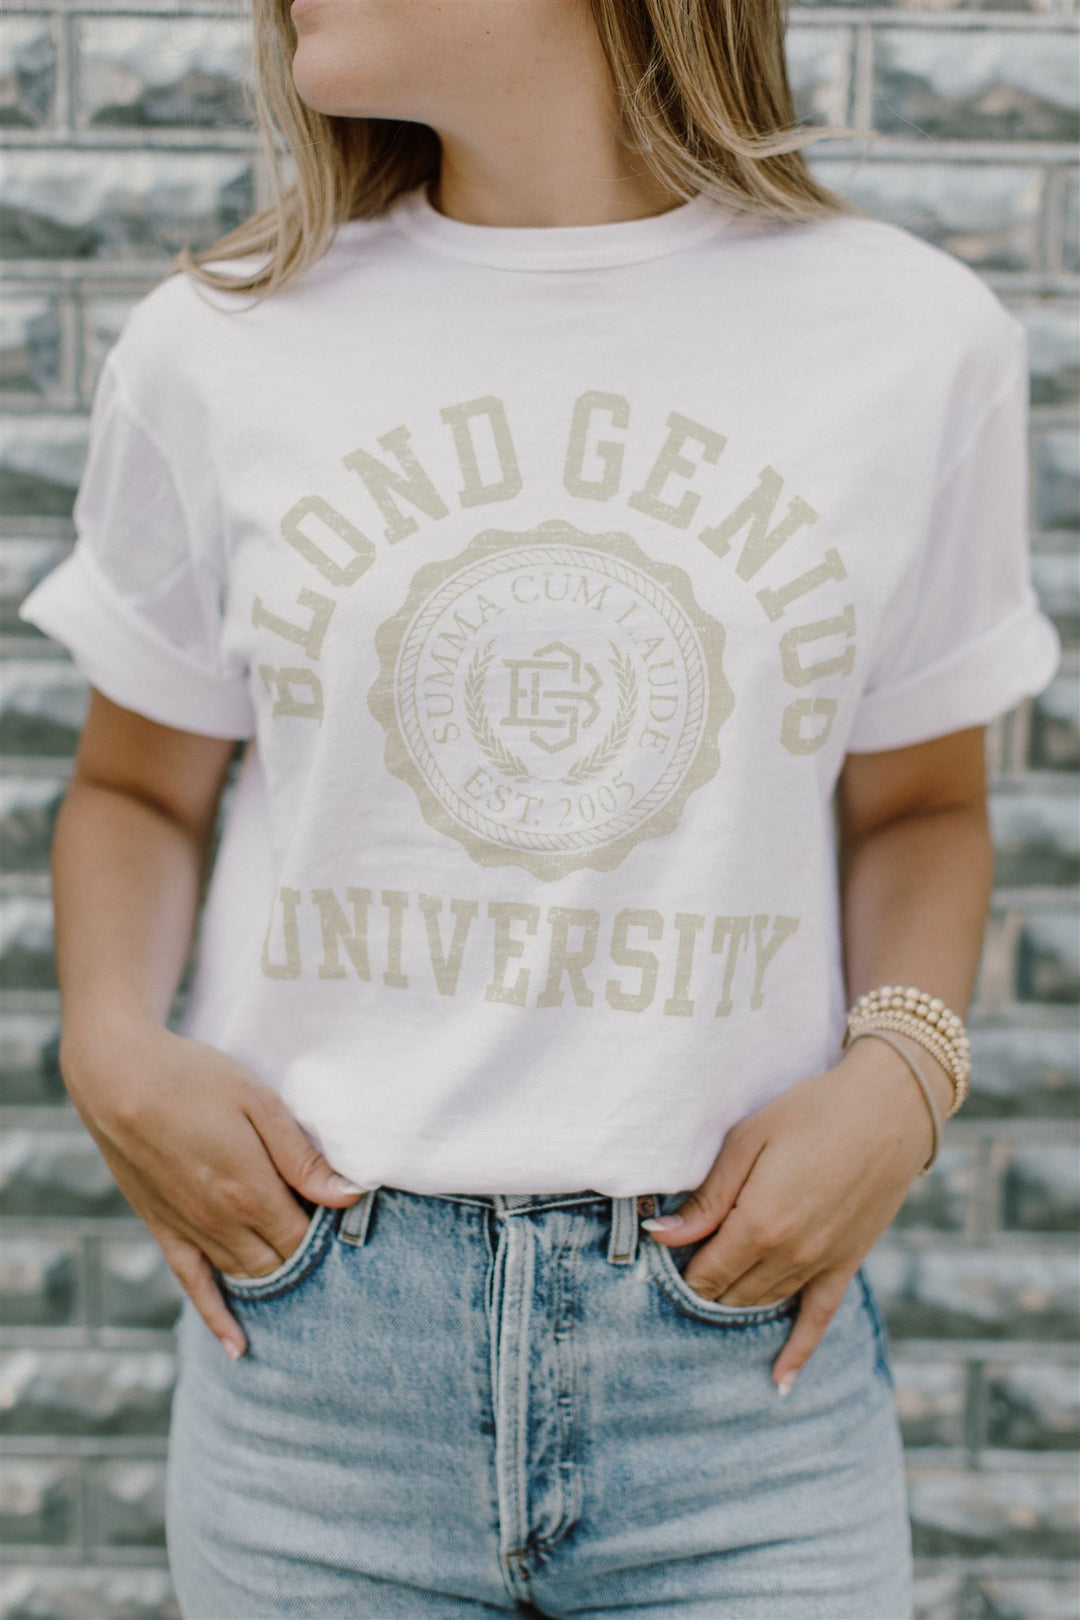 Blond Genius - Blond Genius University Tee in White w/ Gold